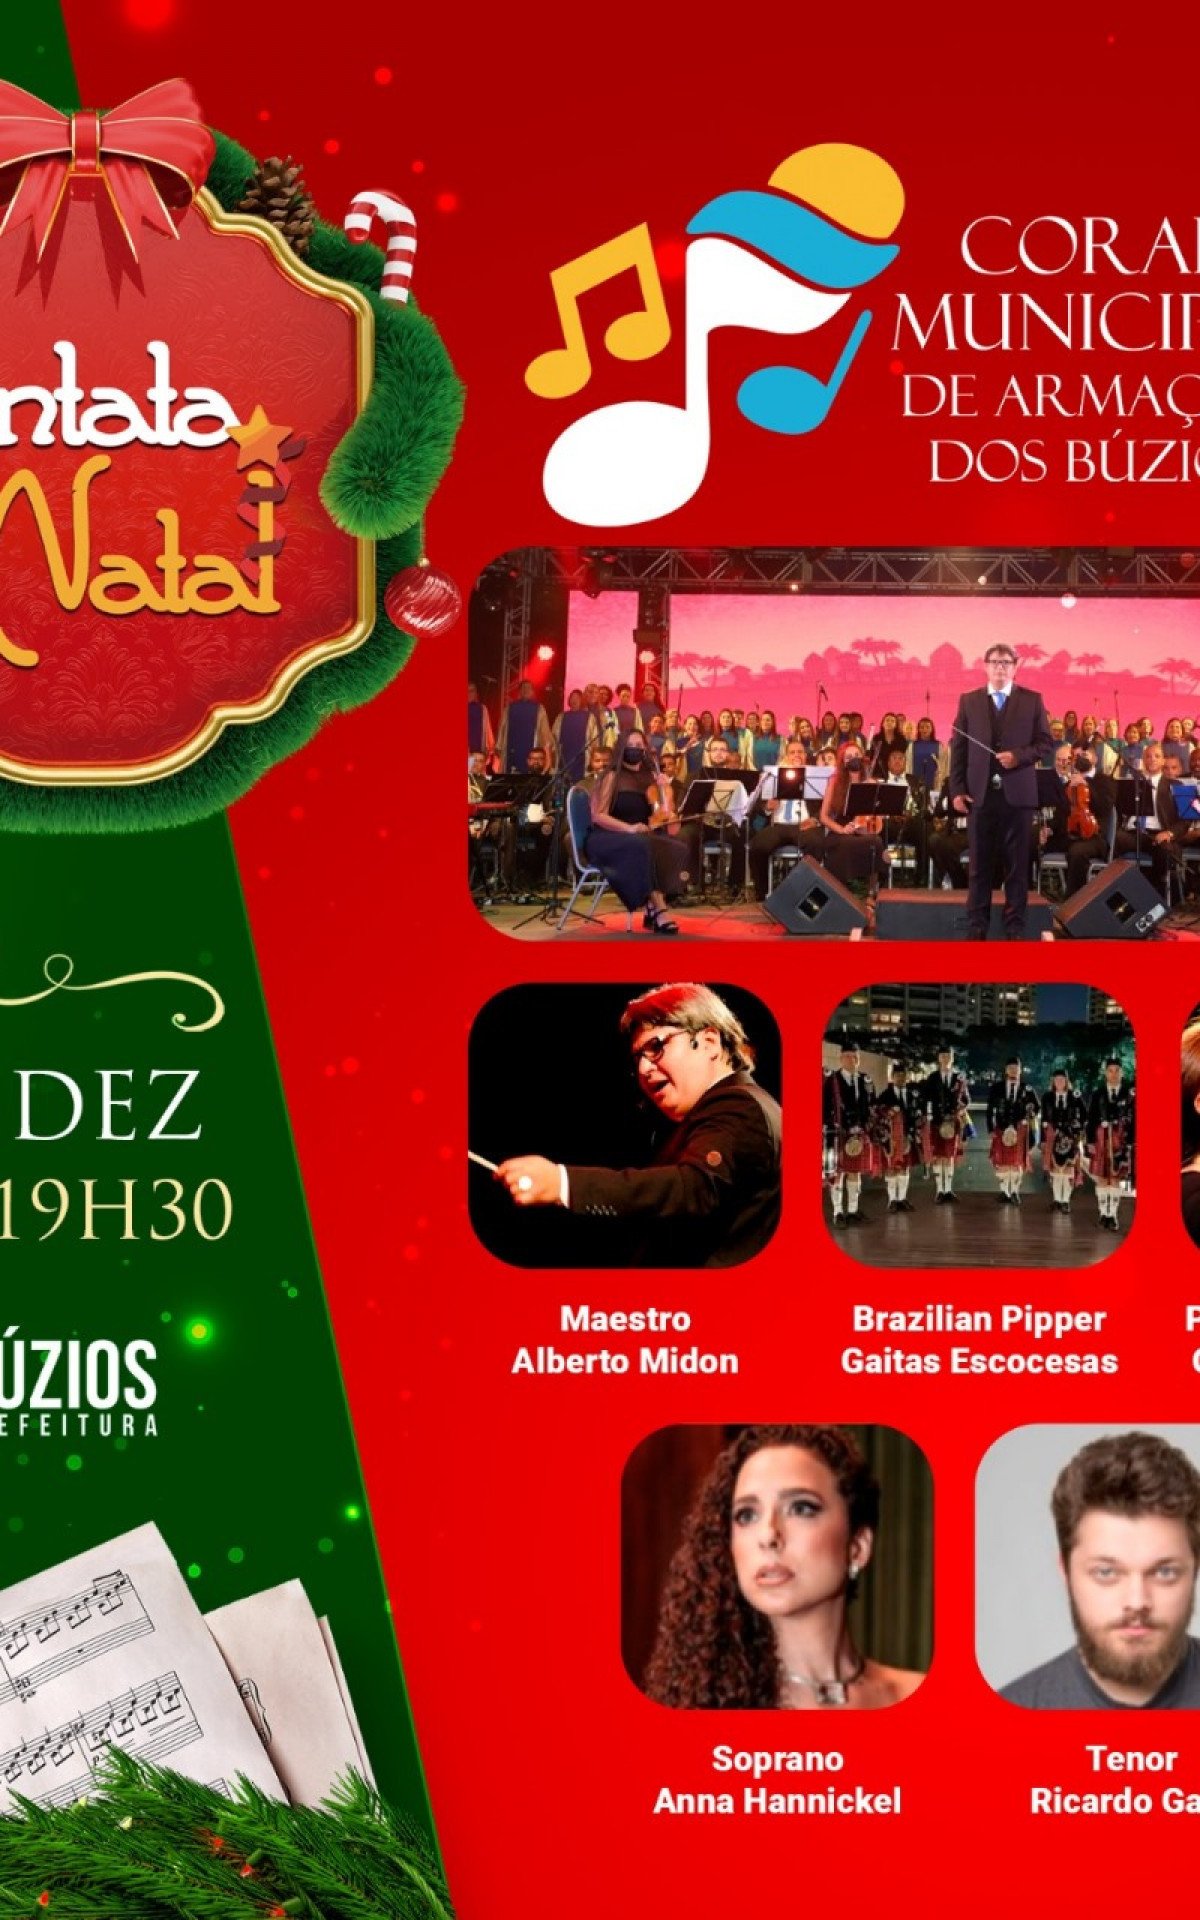 Búzios Apresenta a III Cantata de Natal na Praça Tia Uia, na Rasa, nesta sexta e sábado | Búzios